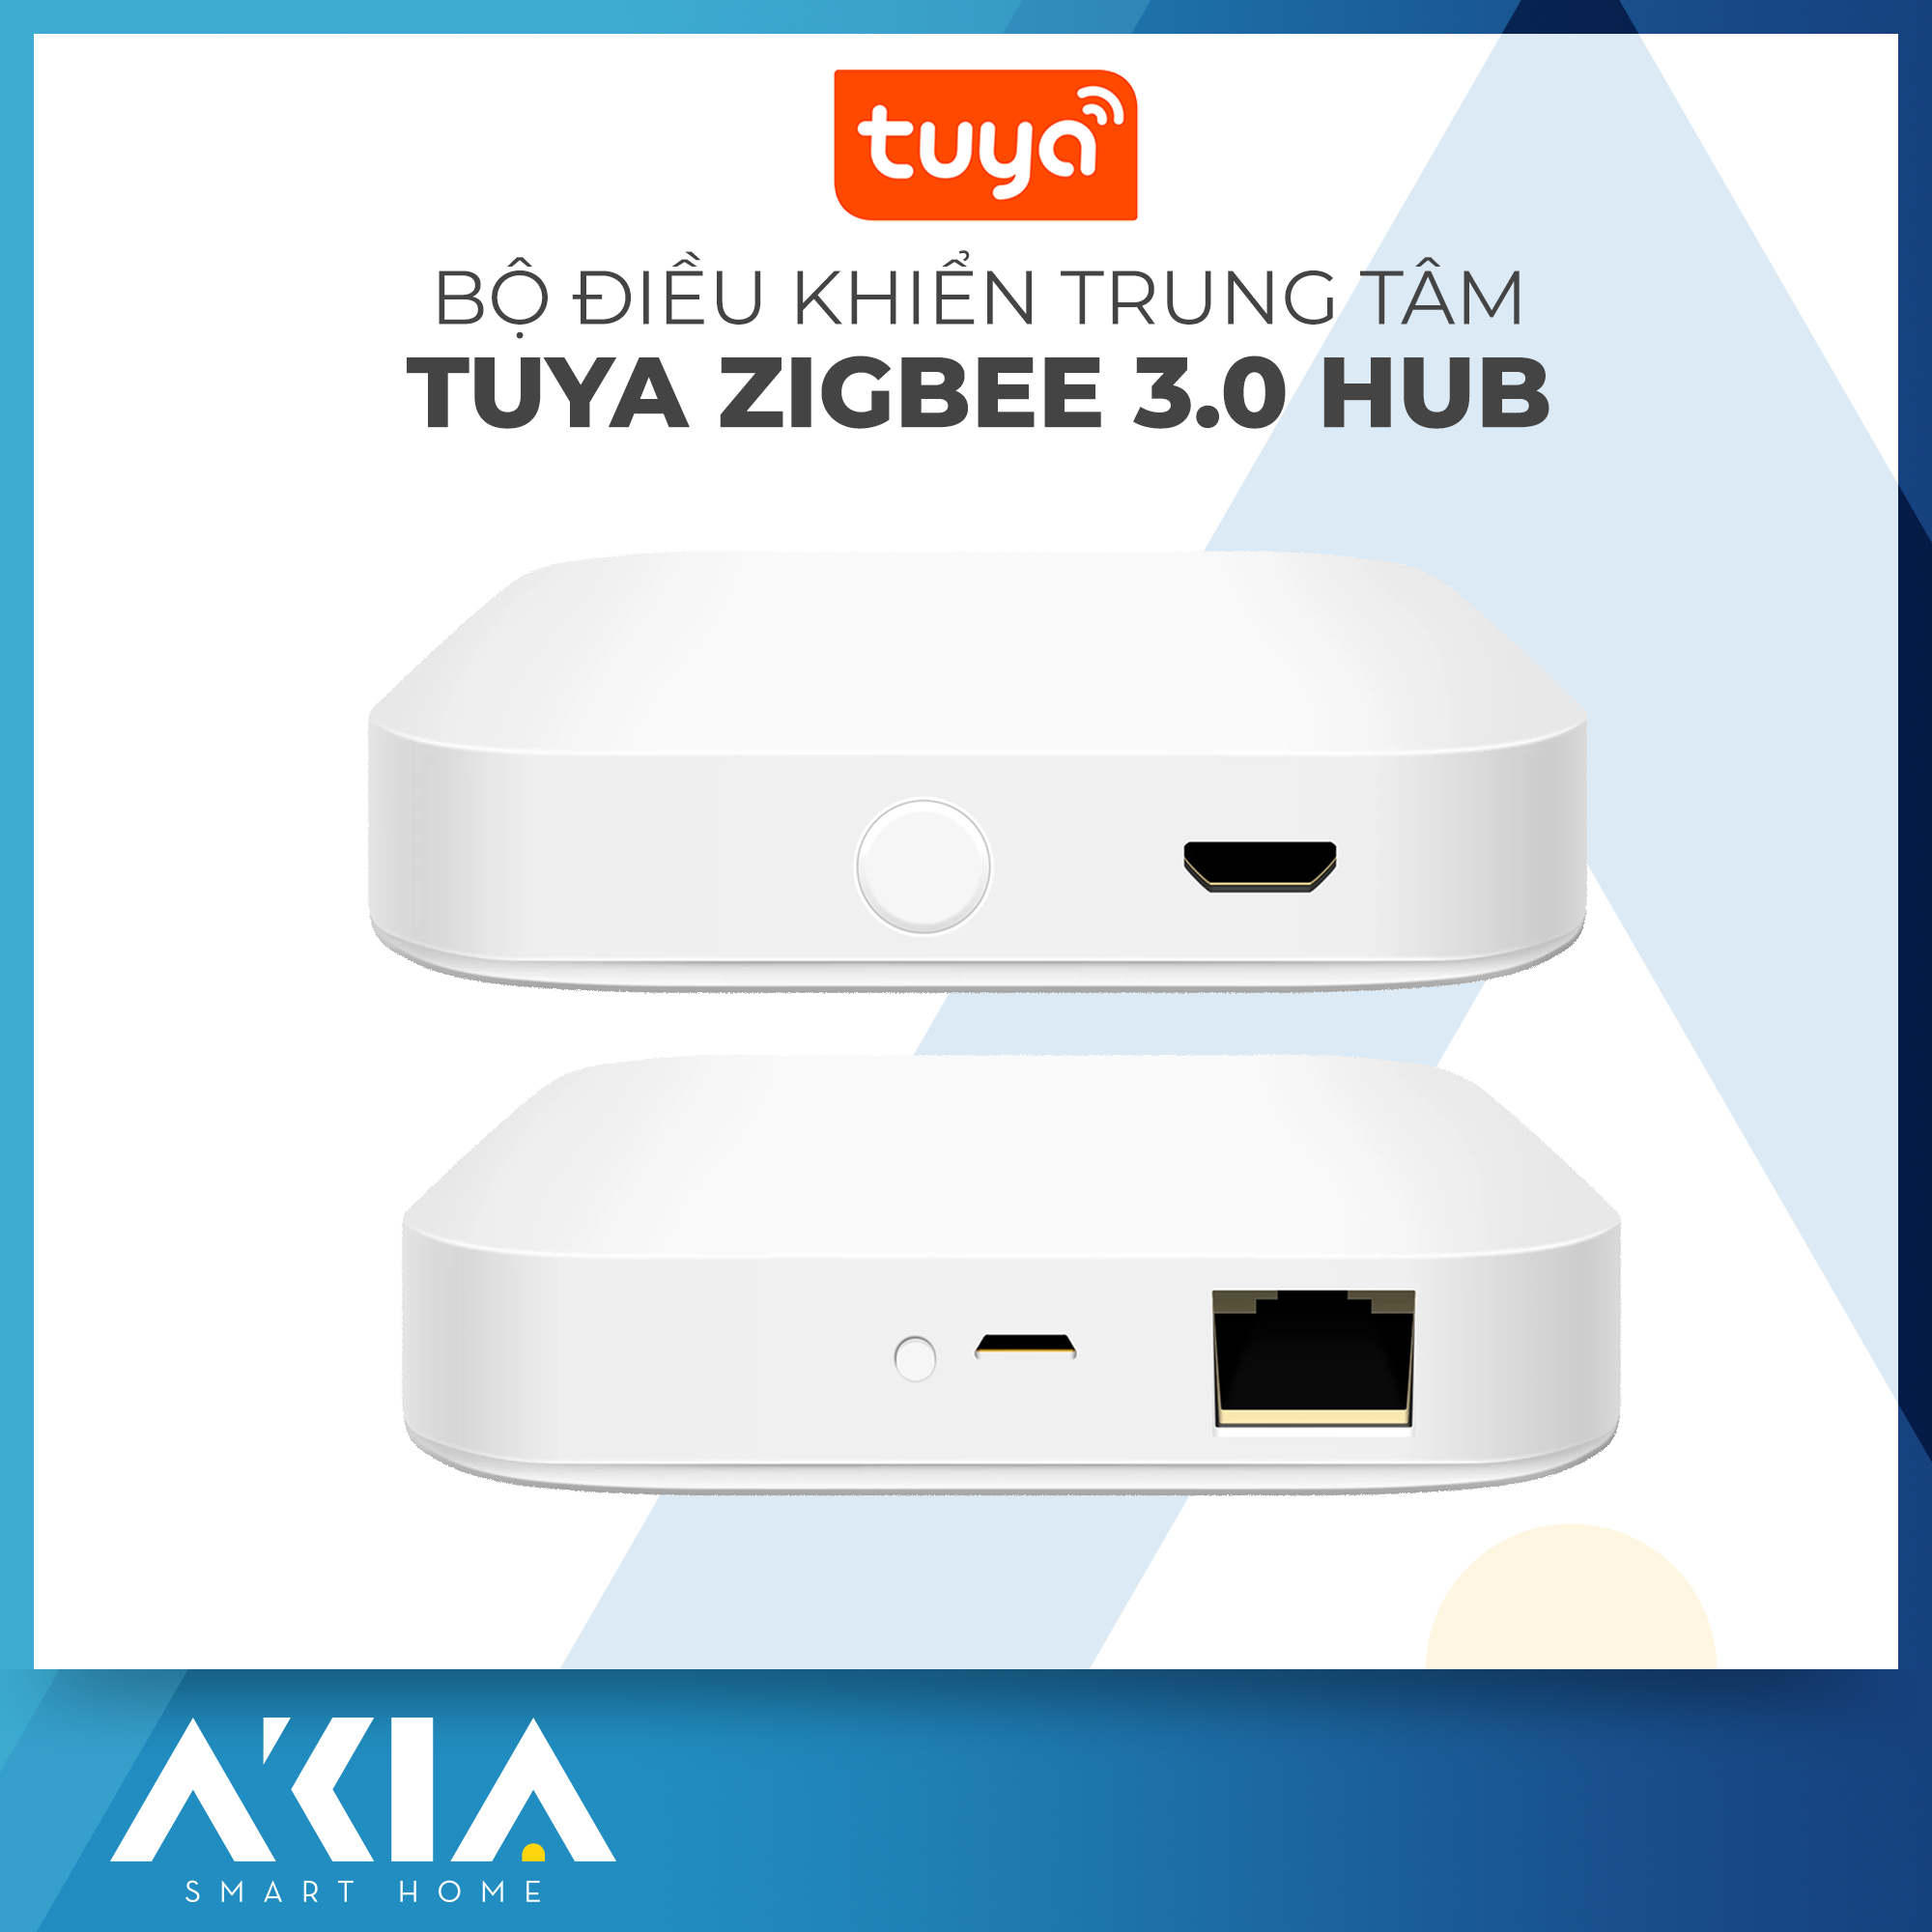 Bộ điều khiển trung tâm Tuya Zigbee phiên bản mới- Hub Zigbee Tuya 3.0